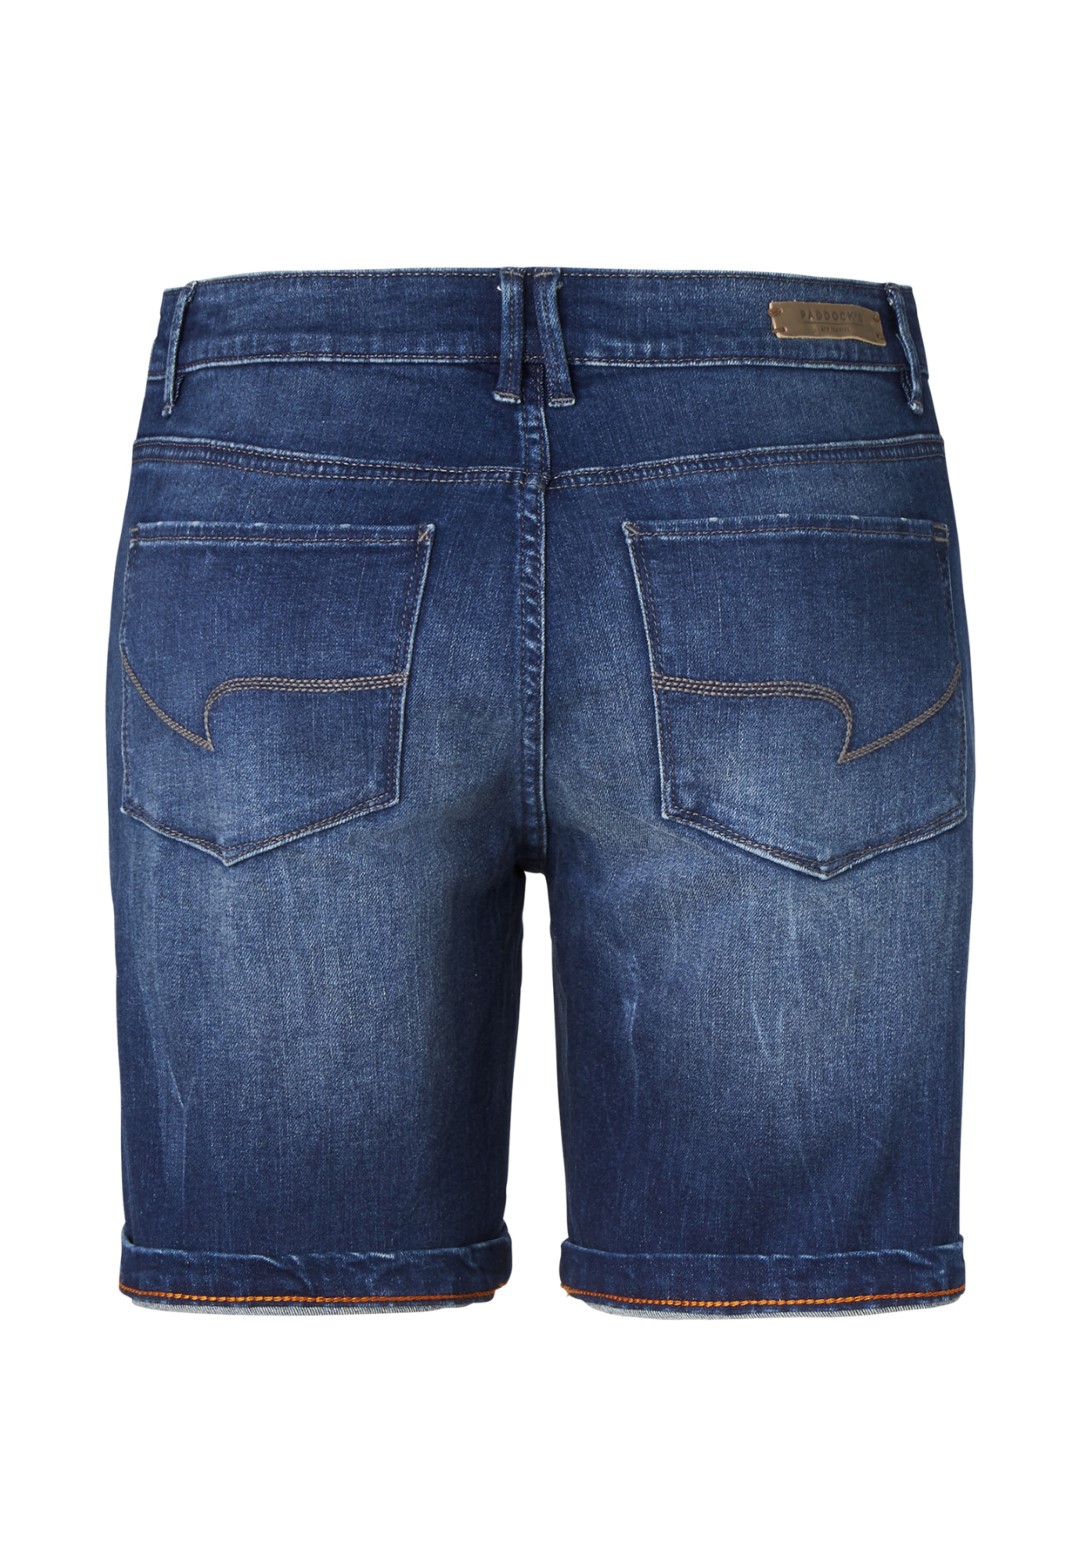 604114918000-4483_2_paddocks-jeans-sascha-bermuda-low-rise-tapered-leg.jpg